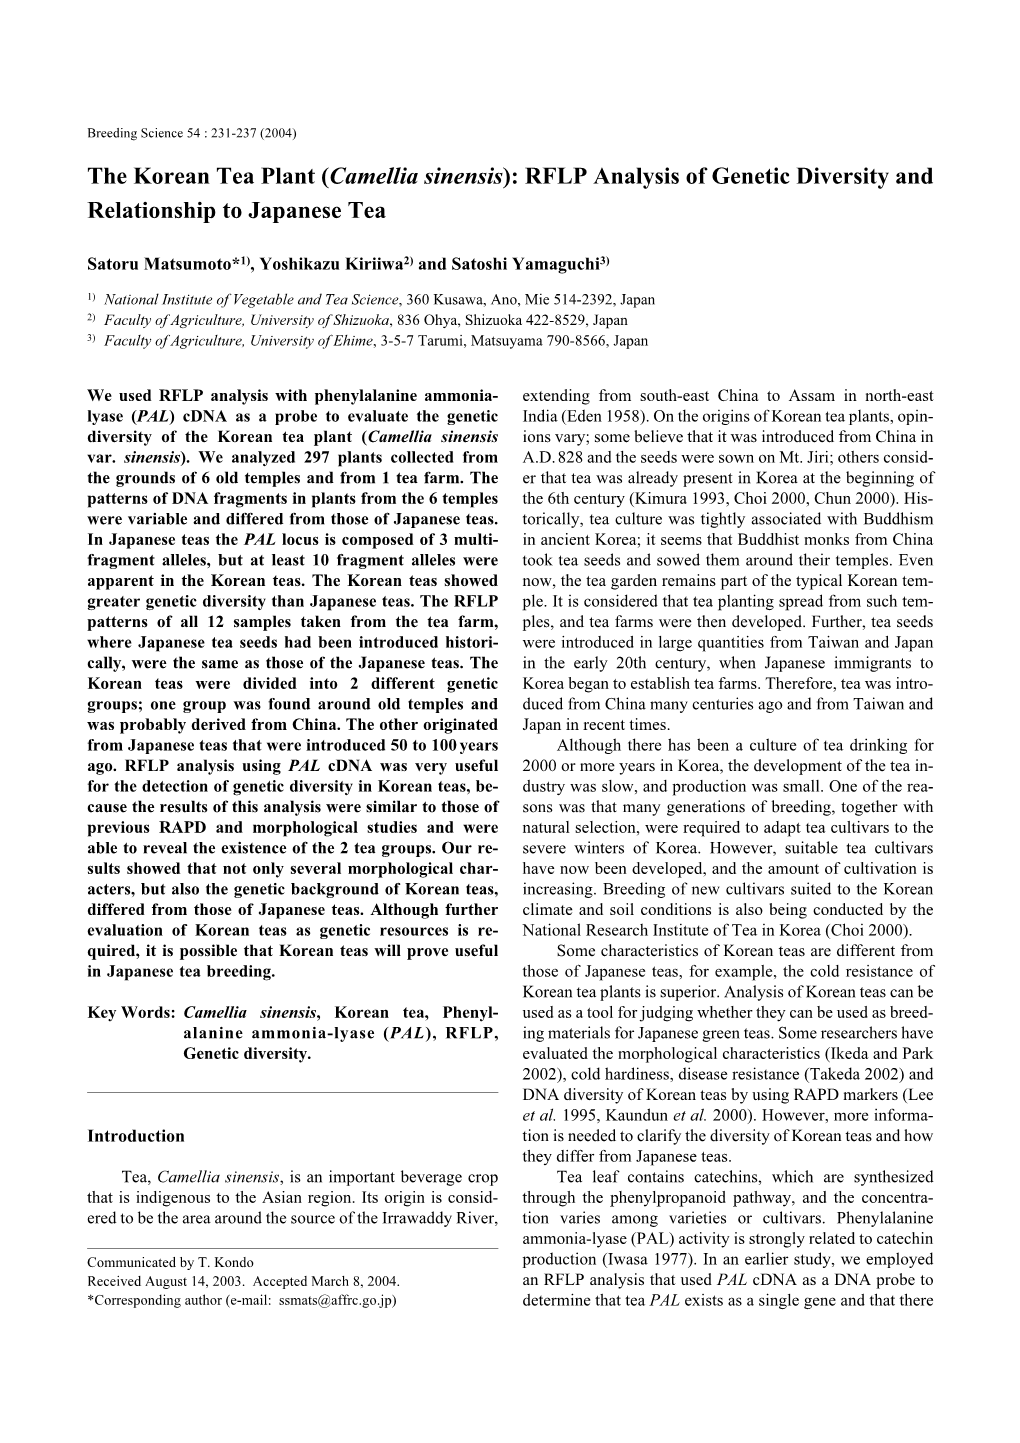 The Korean Tea Plant (Camellia Sinensis): RFLP Analysis of Genetic Diversity and Relationship to Japanese Tea